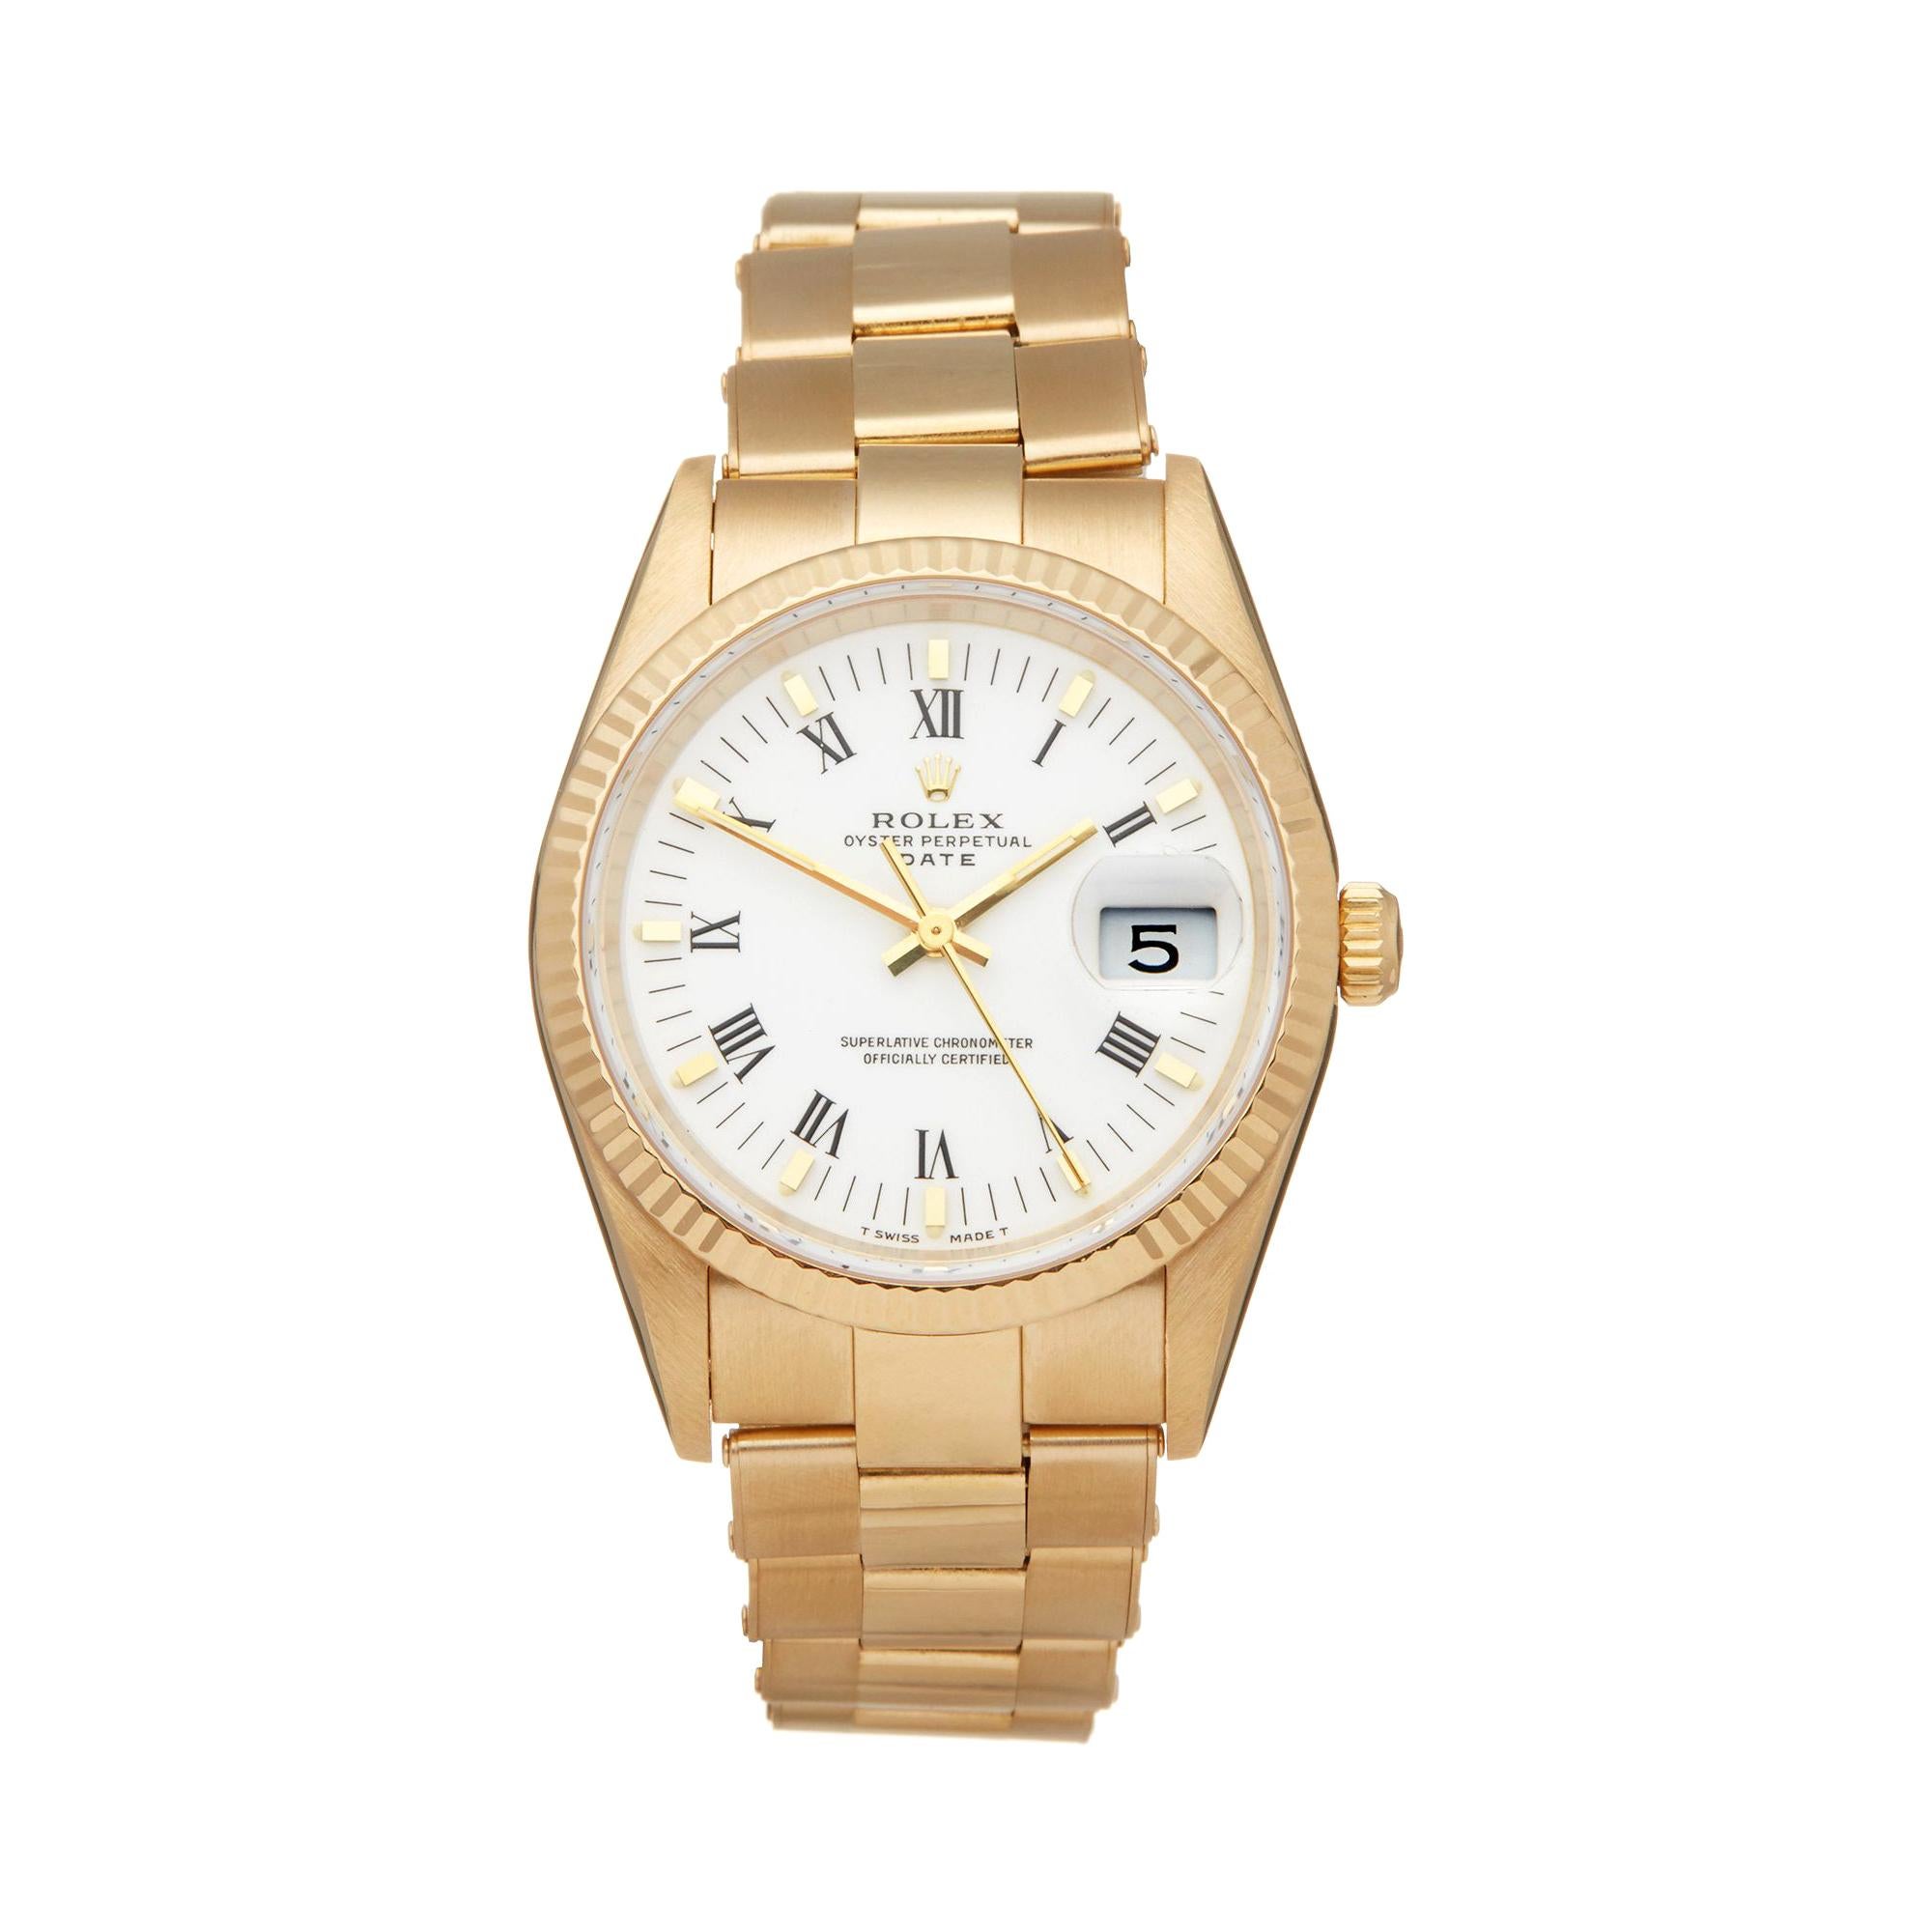 Rolex Oyster Perpetual Date 18 Karat Yellow Gold 15238 Wristwatch